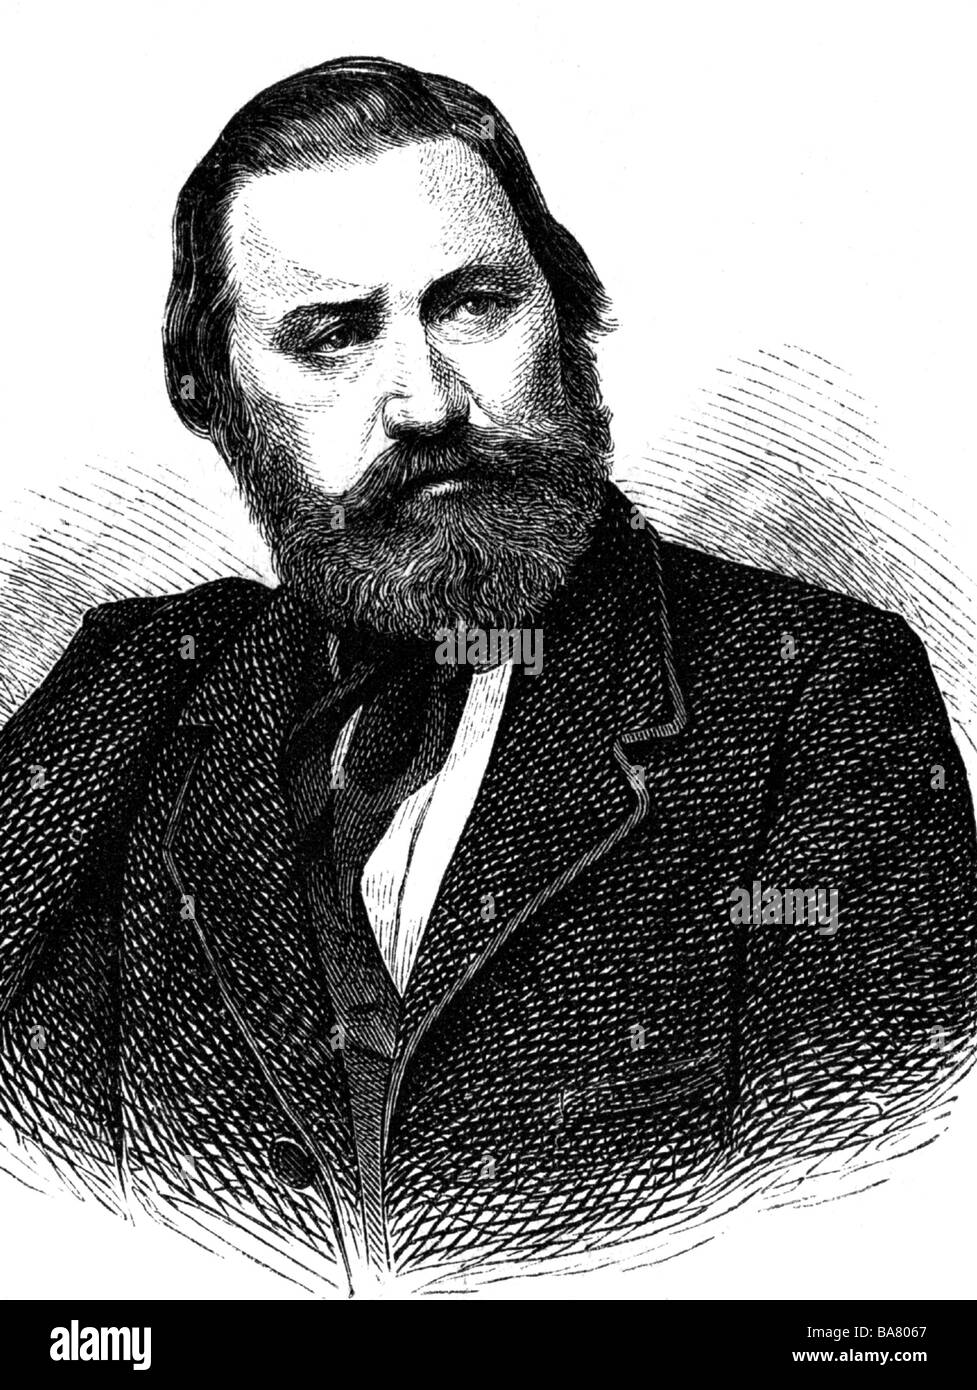 Kurz, Hermann, 30.11.1813 - 10.10.1873, German author / writer, portrait, wood engraving, 19th century, Stock Photo